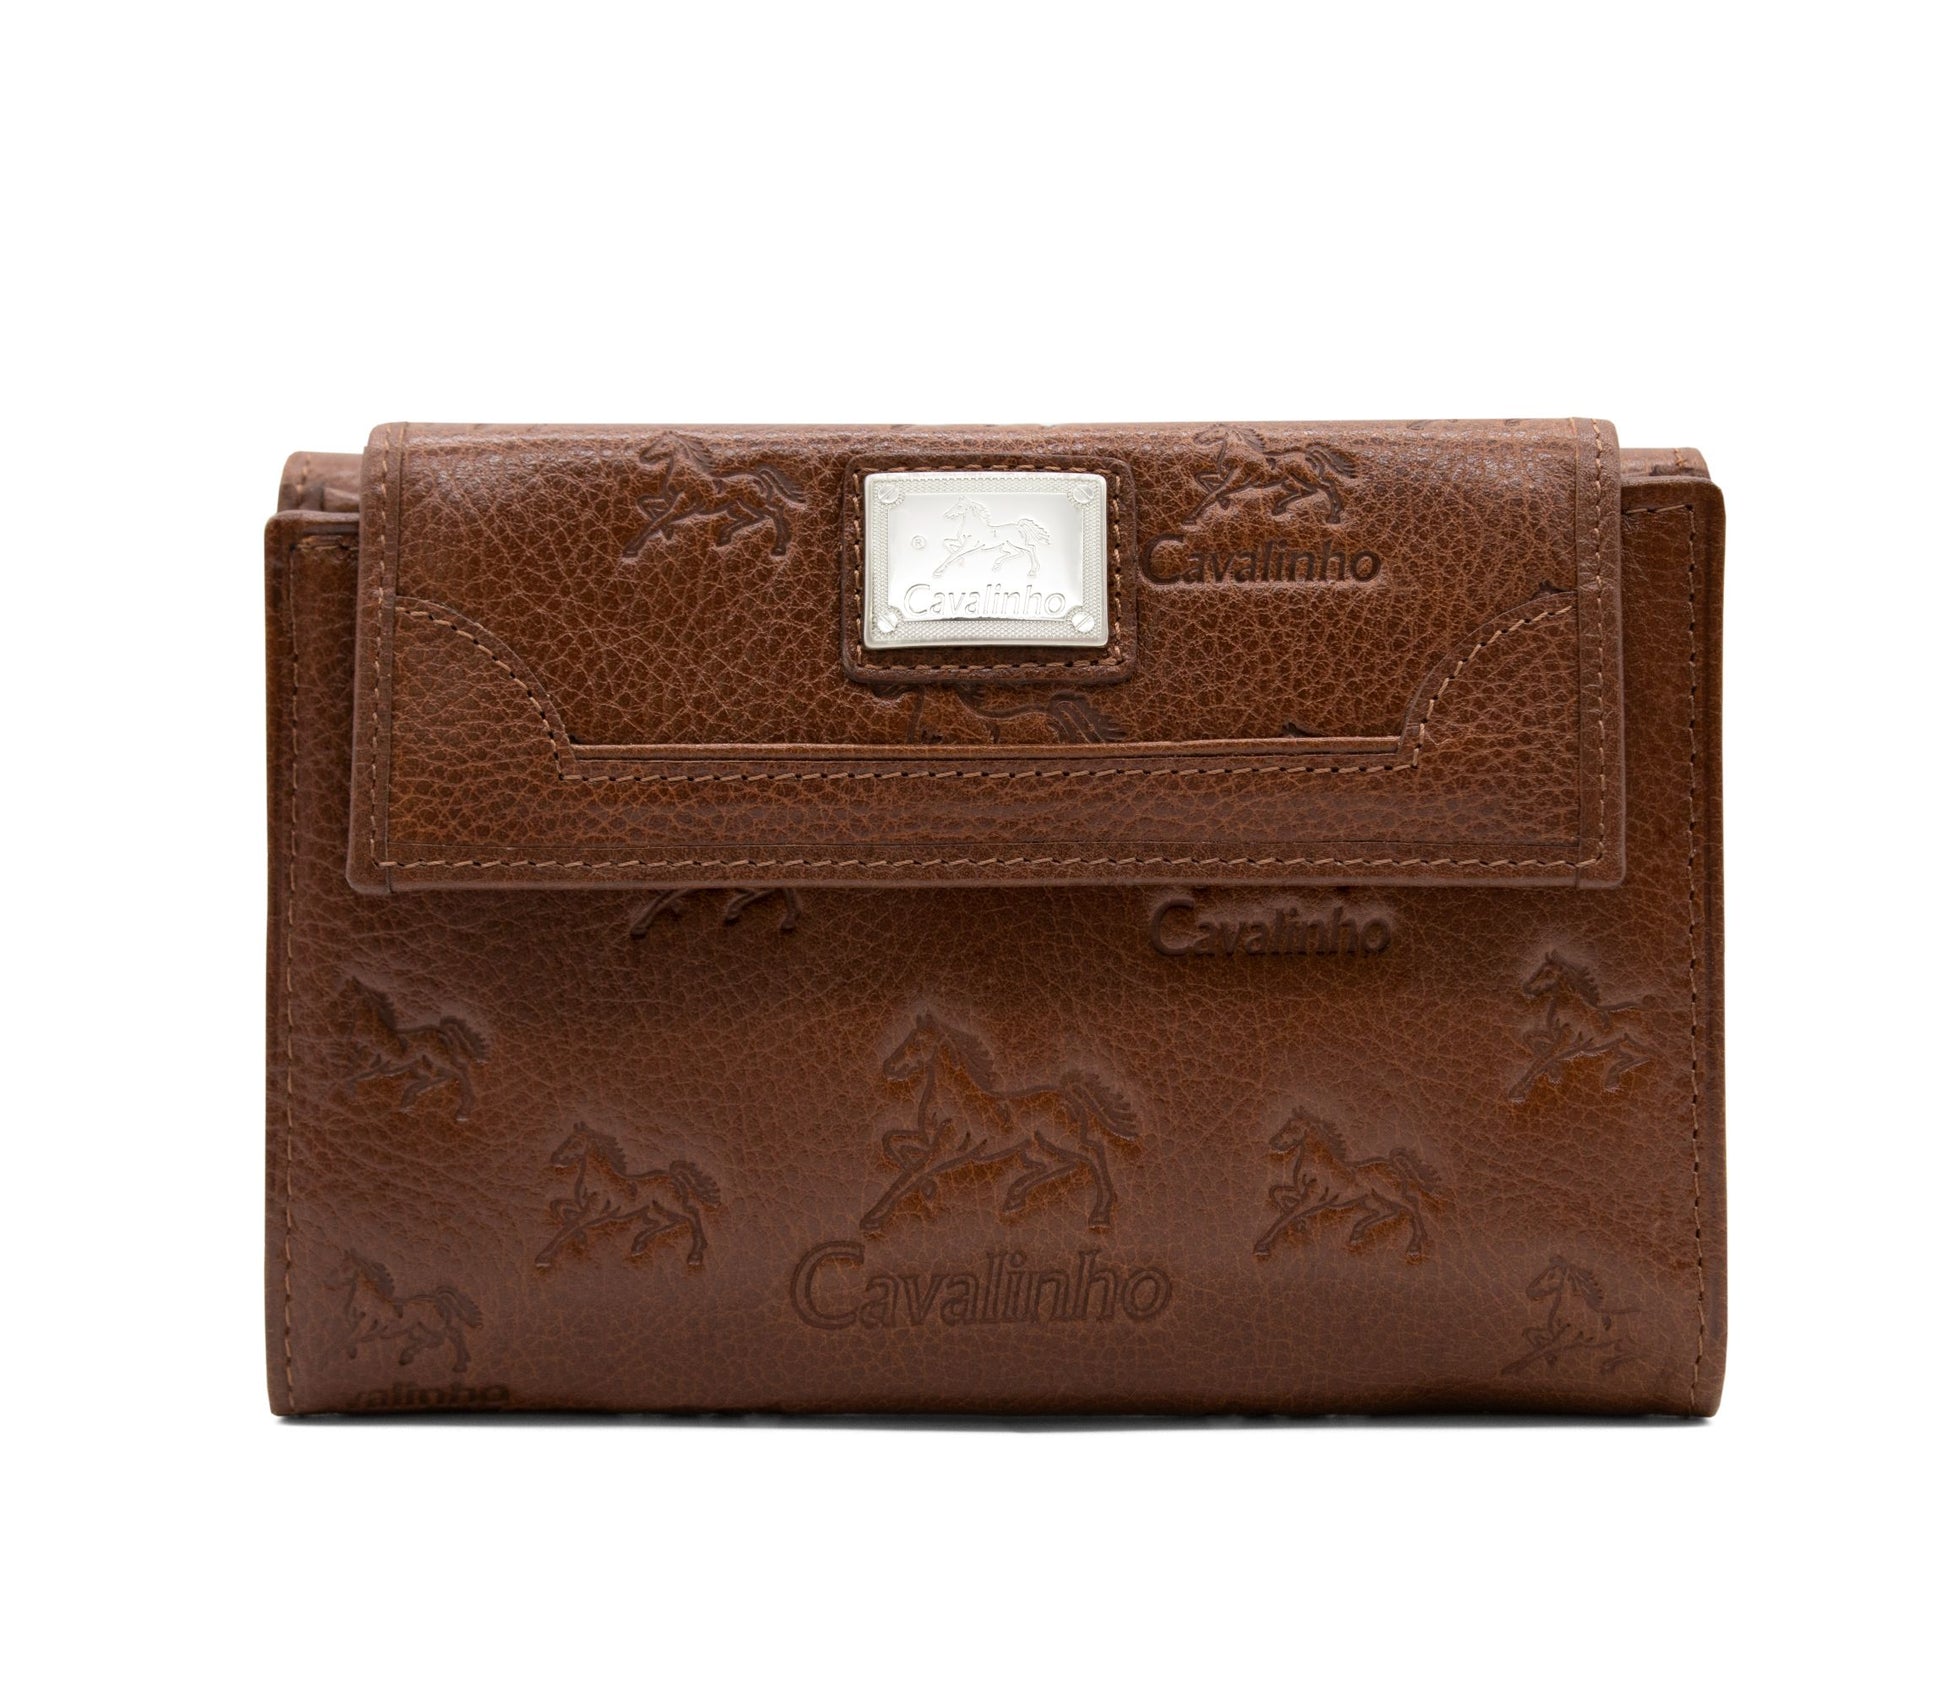 Cavalinho Signature Leather Wallet - SaddleBrown - 28090205.13_1